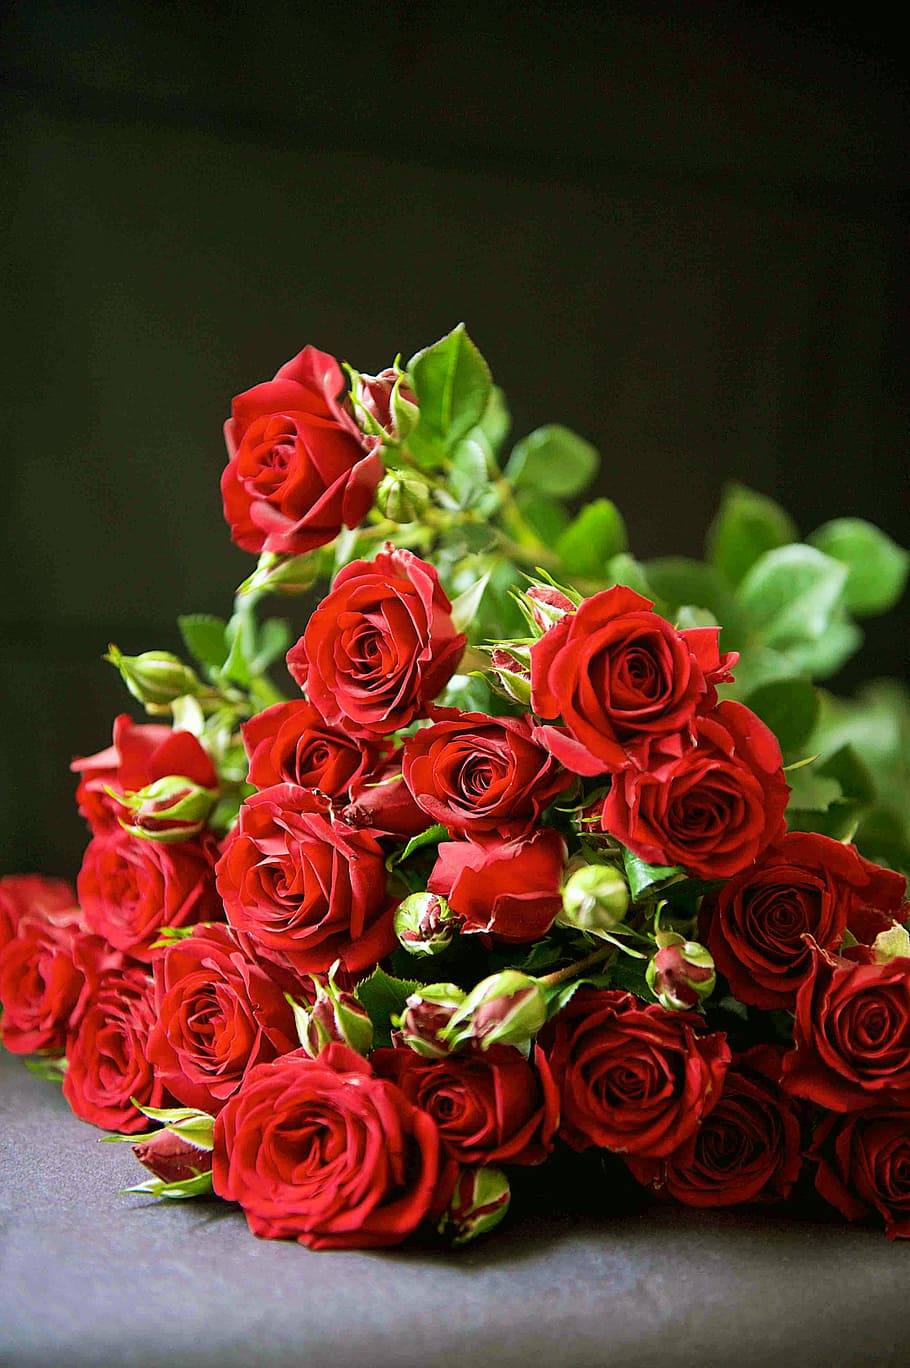 mawar, buket, bunga, dekorasi, pernikahan, tanaman berbunga, mawar - bunga, tanaman, keindahan di alam, kesegaran